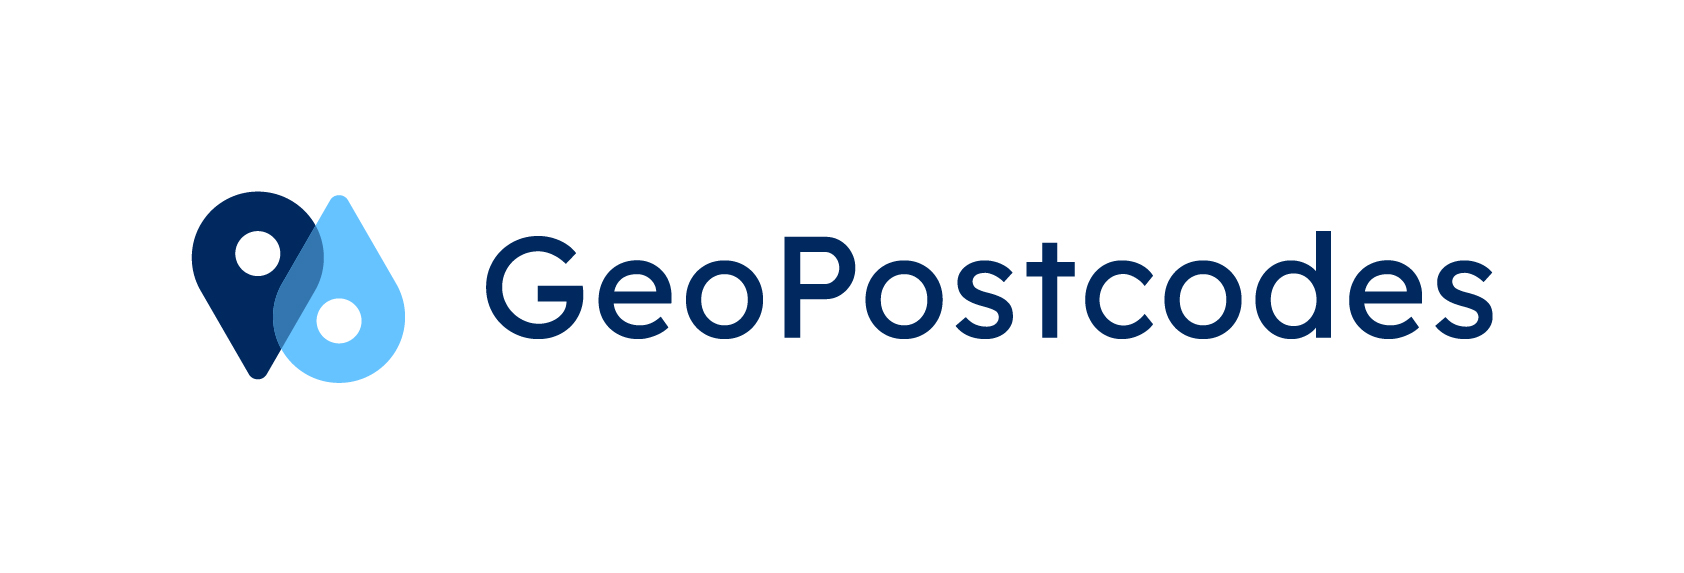 GeoPostcodes